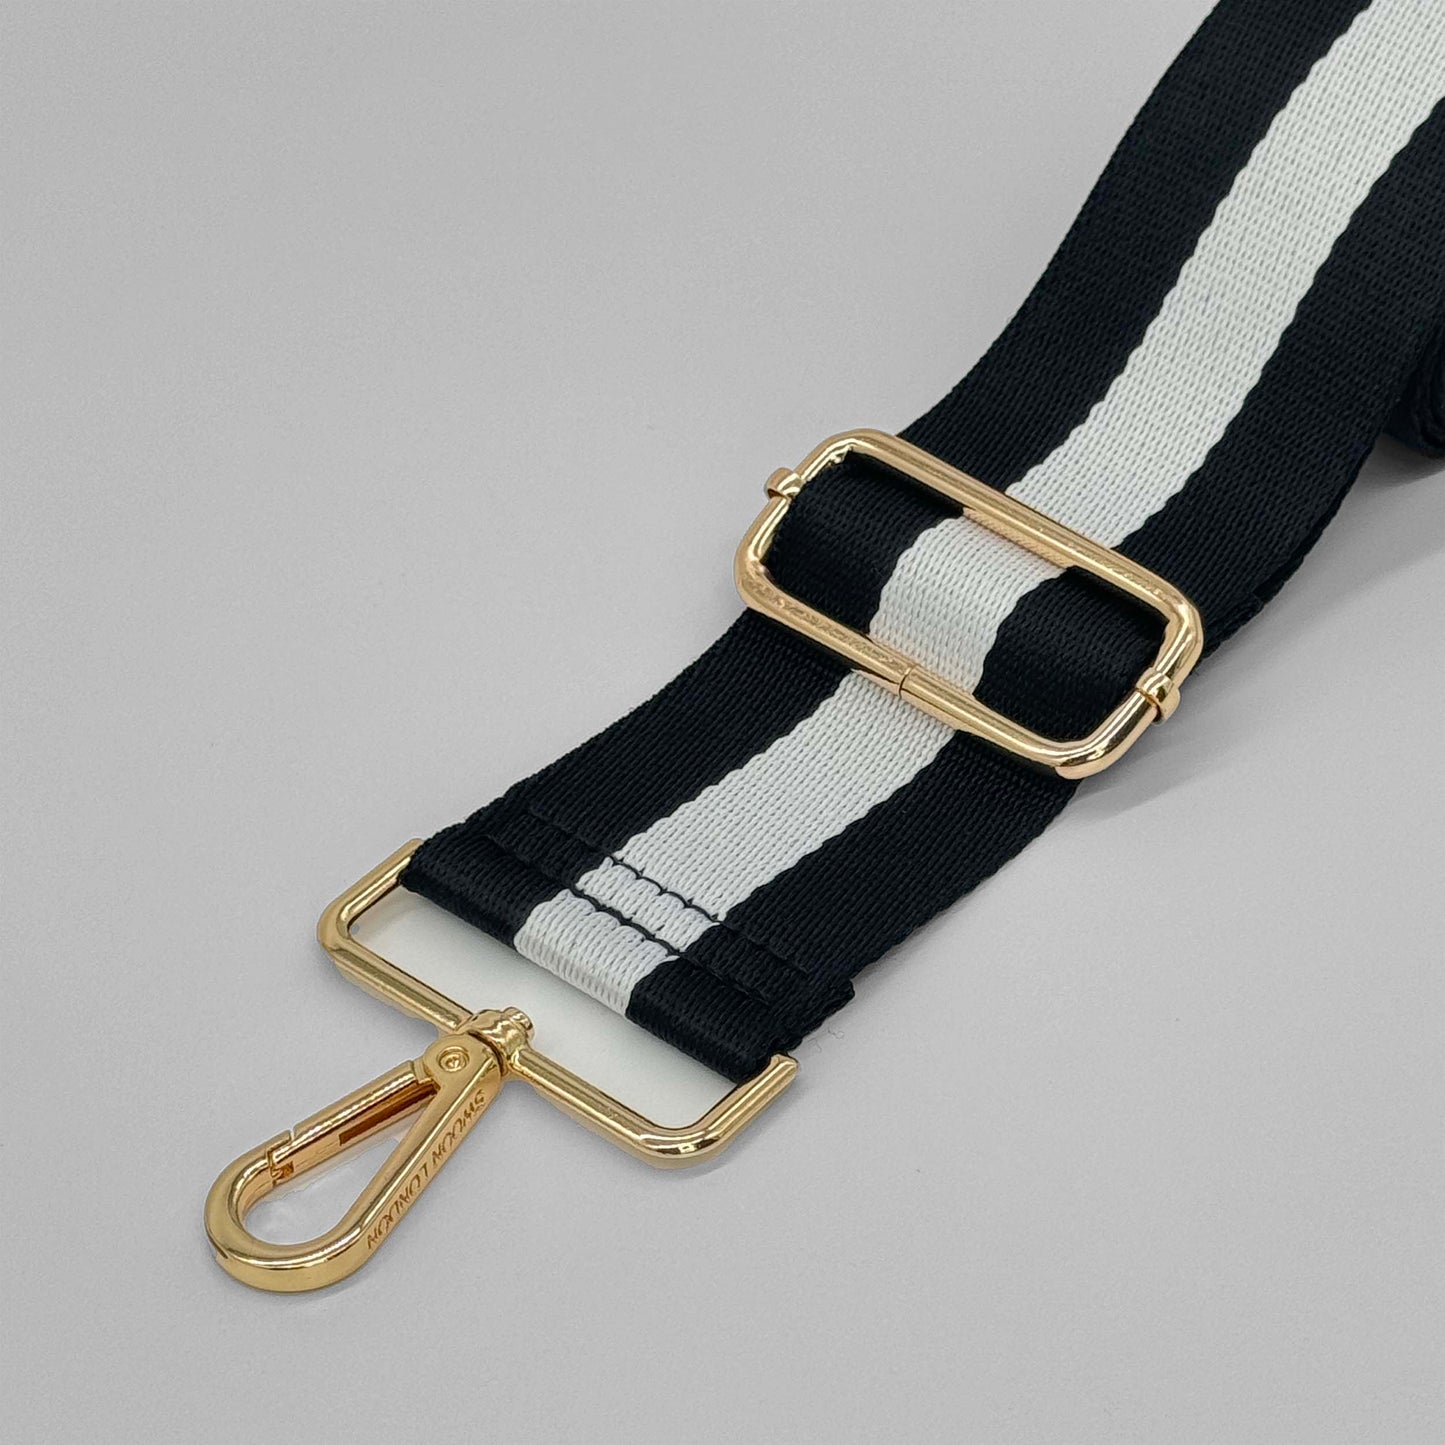 Black & White Stripe Bag Strap - Close Up